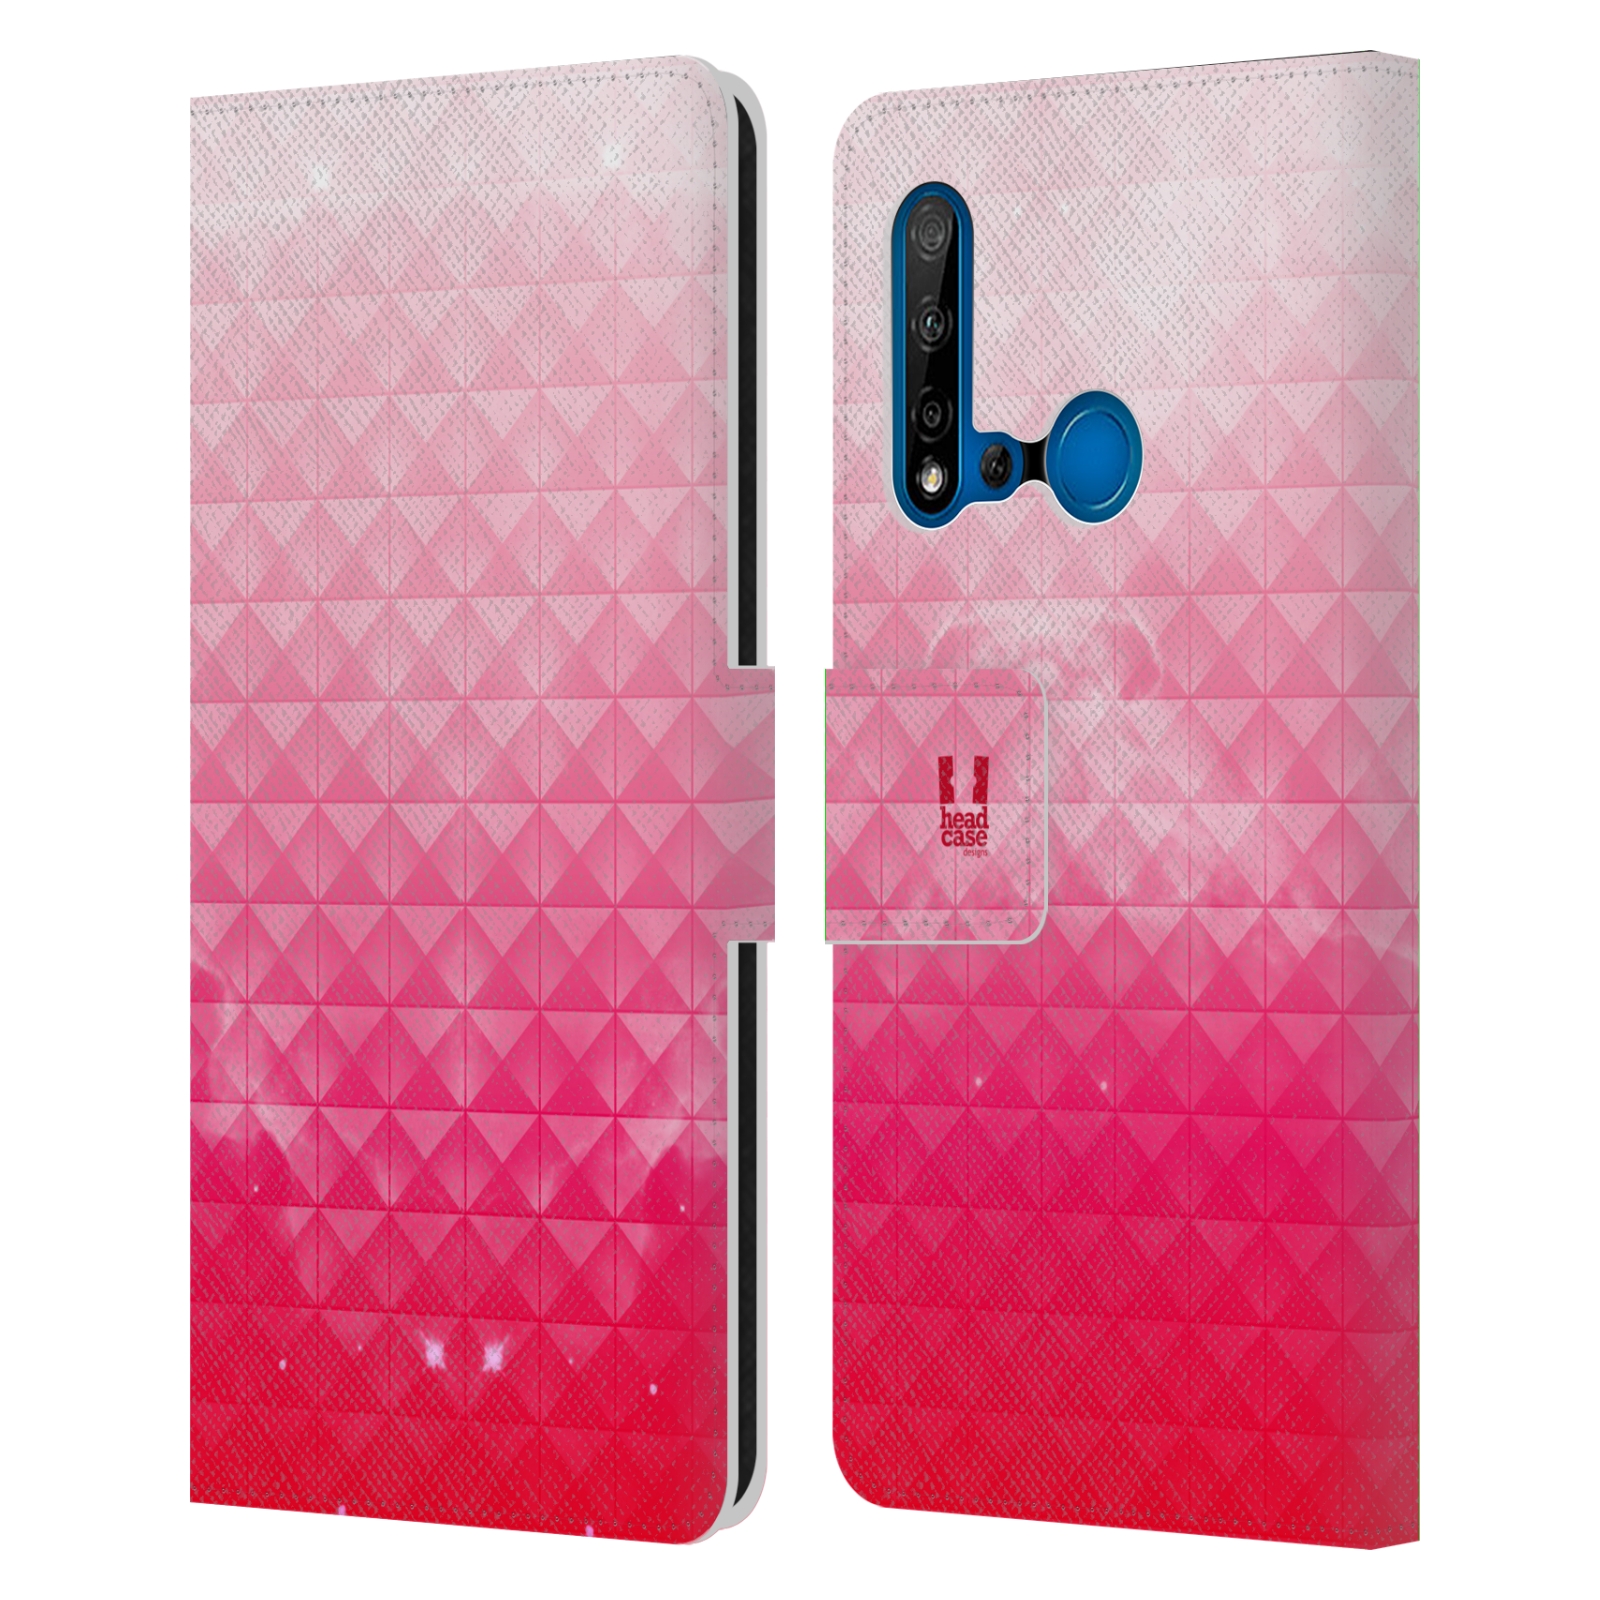 Pouzdro na mobil Huawei P20 LITE 2019 barevná vesmírná mlhovina růžová jahoda